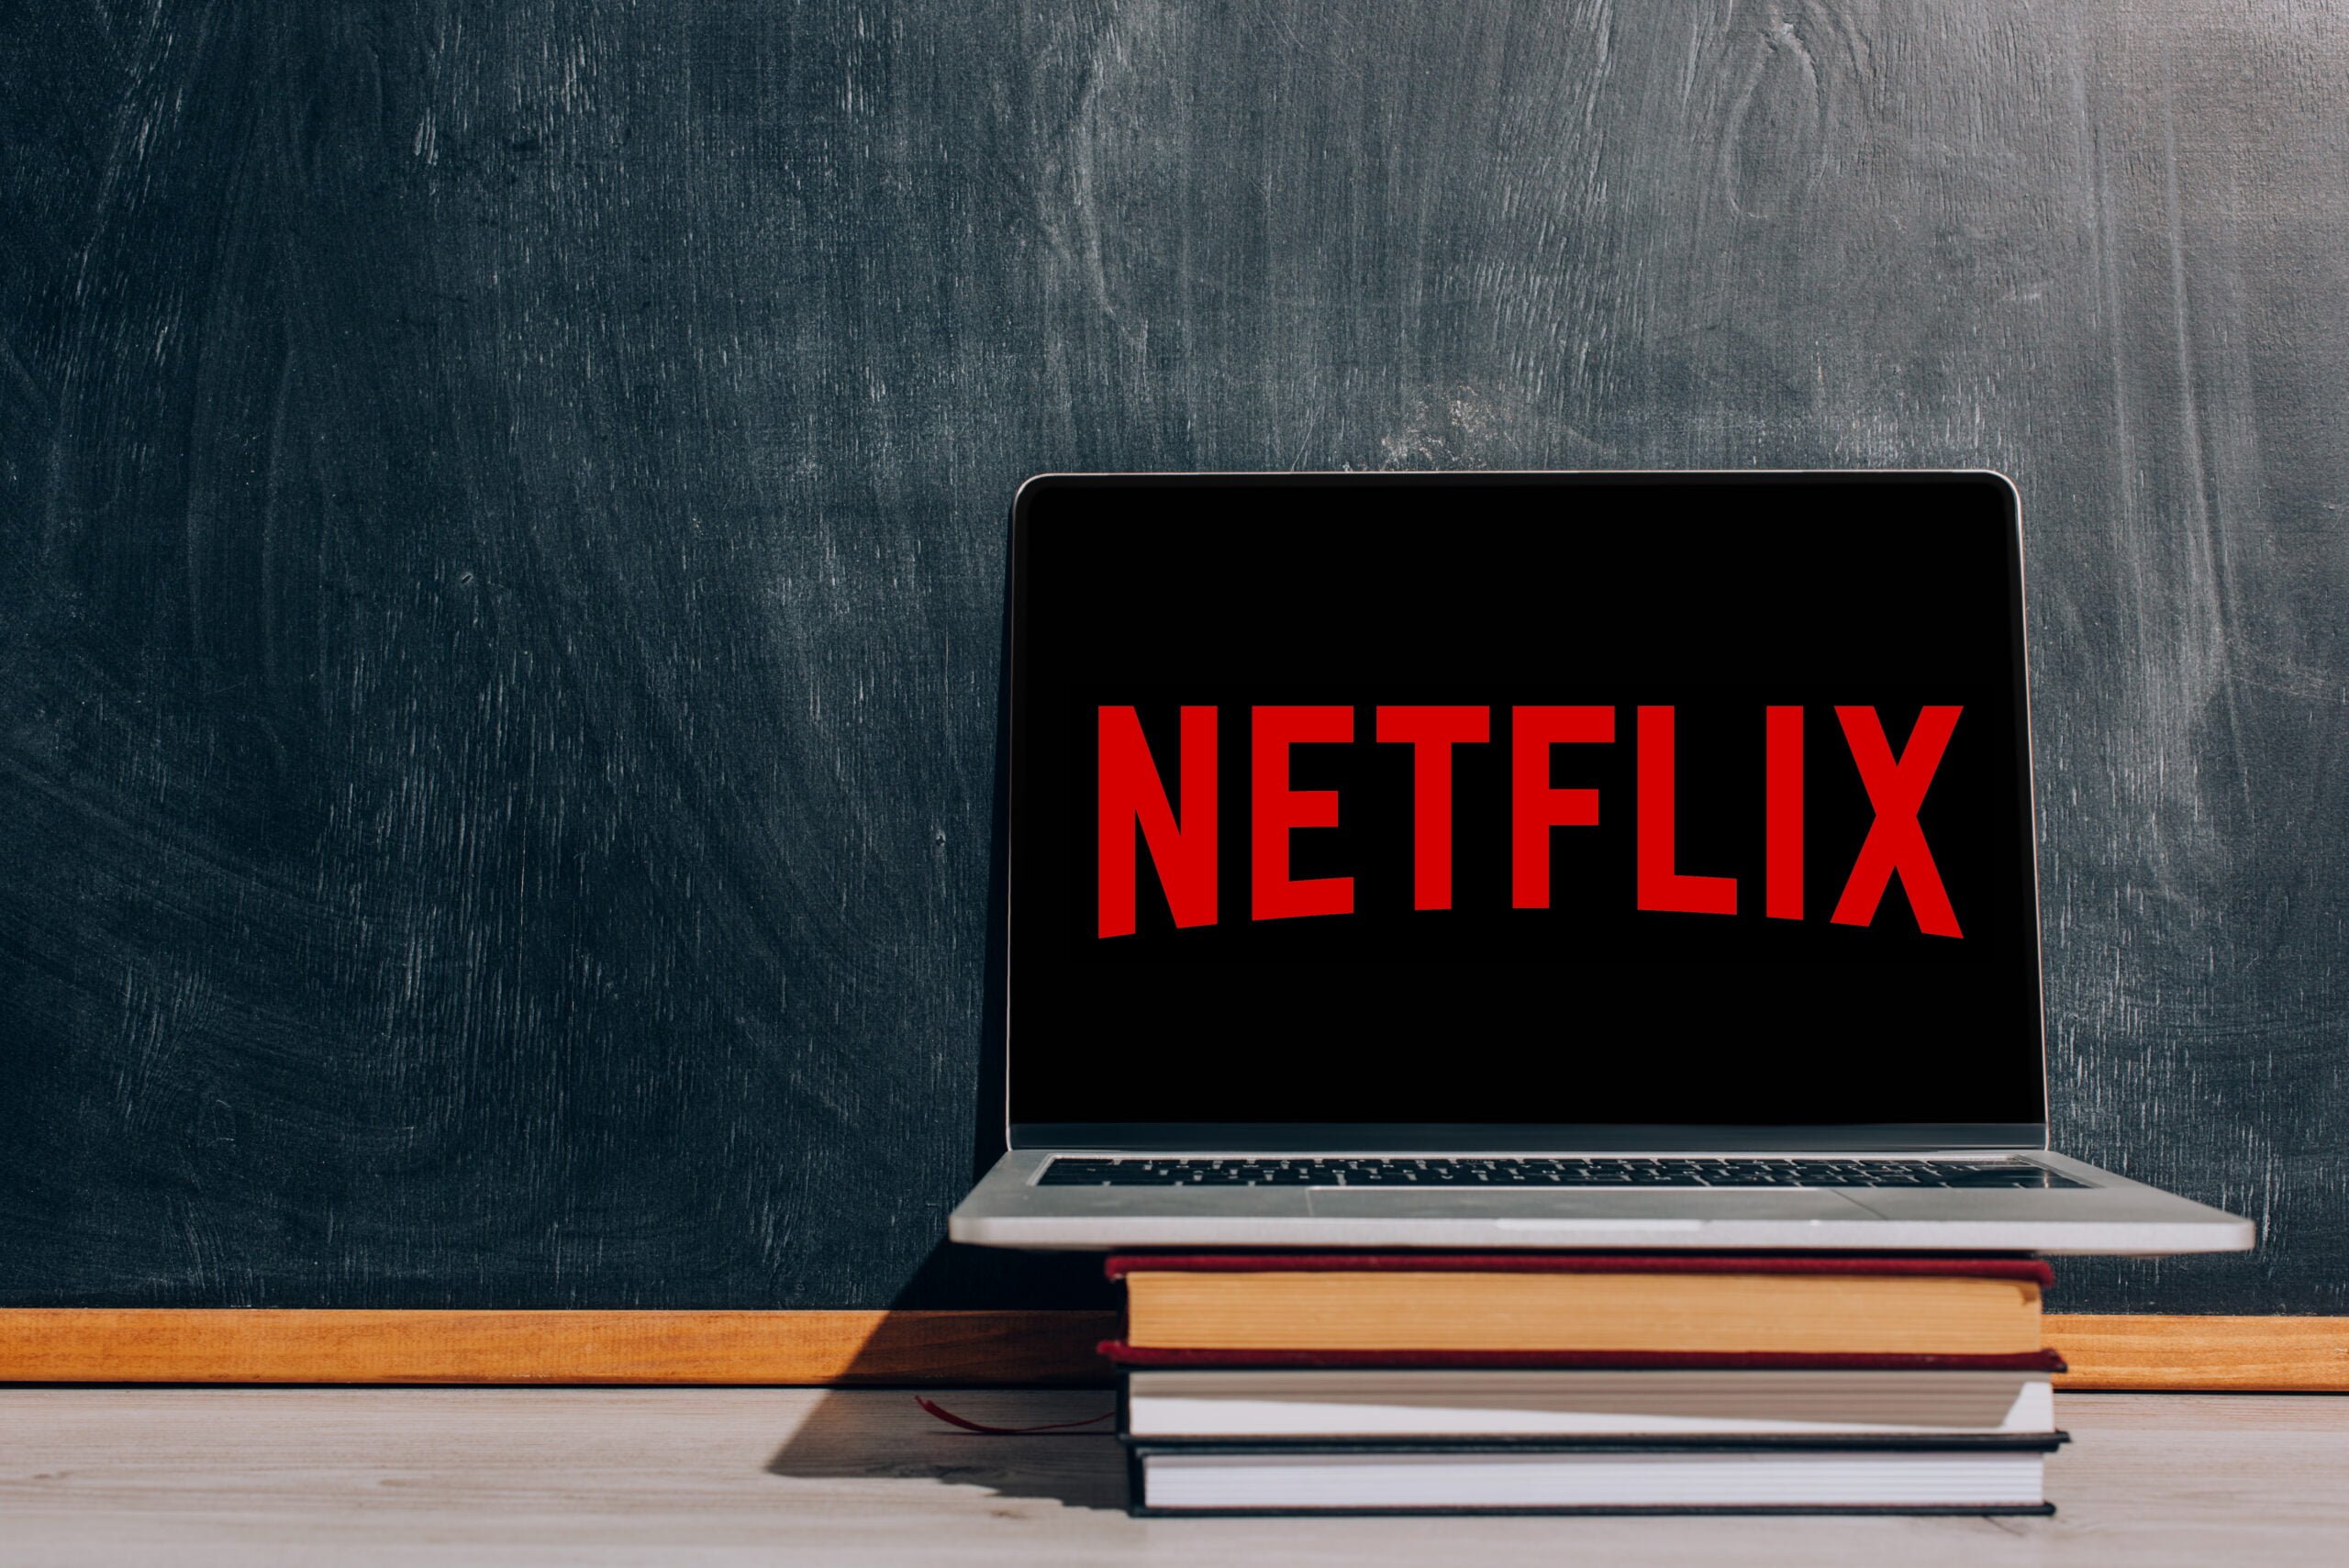 Netflix-laptop-ogladanie-scaled.jpg